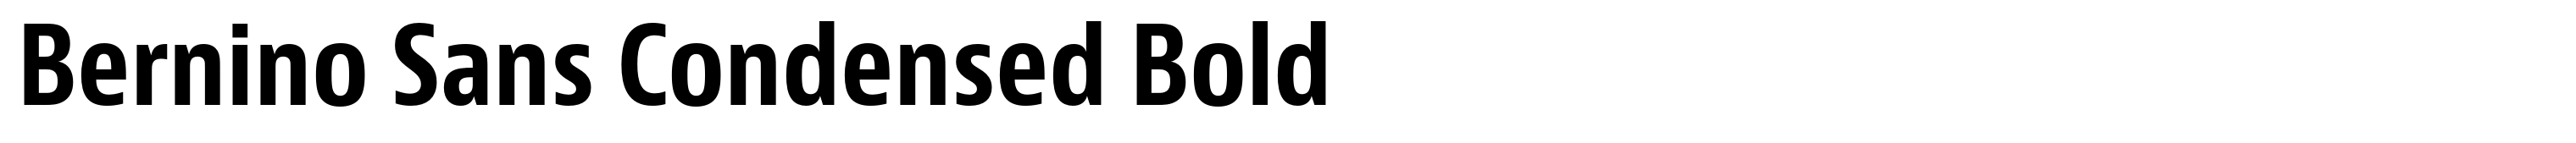 Bernino Sans Condensed Bold